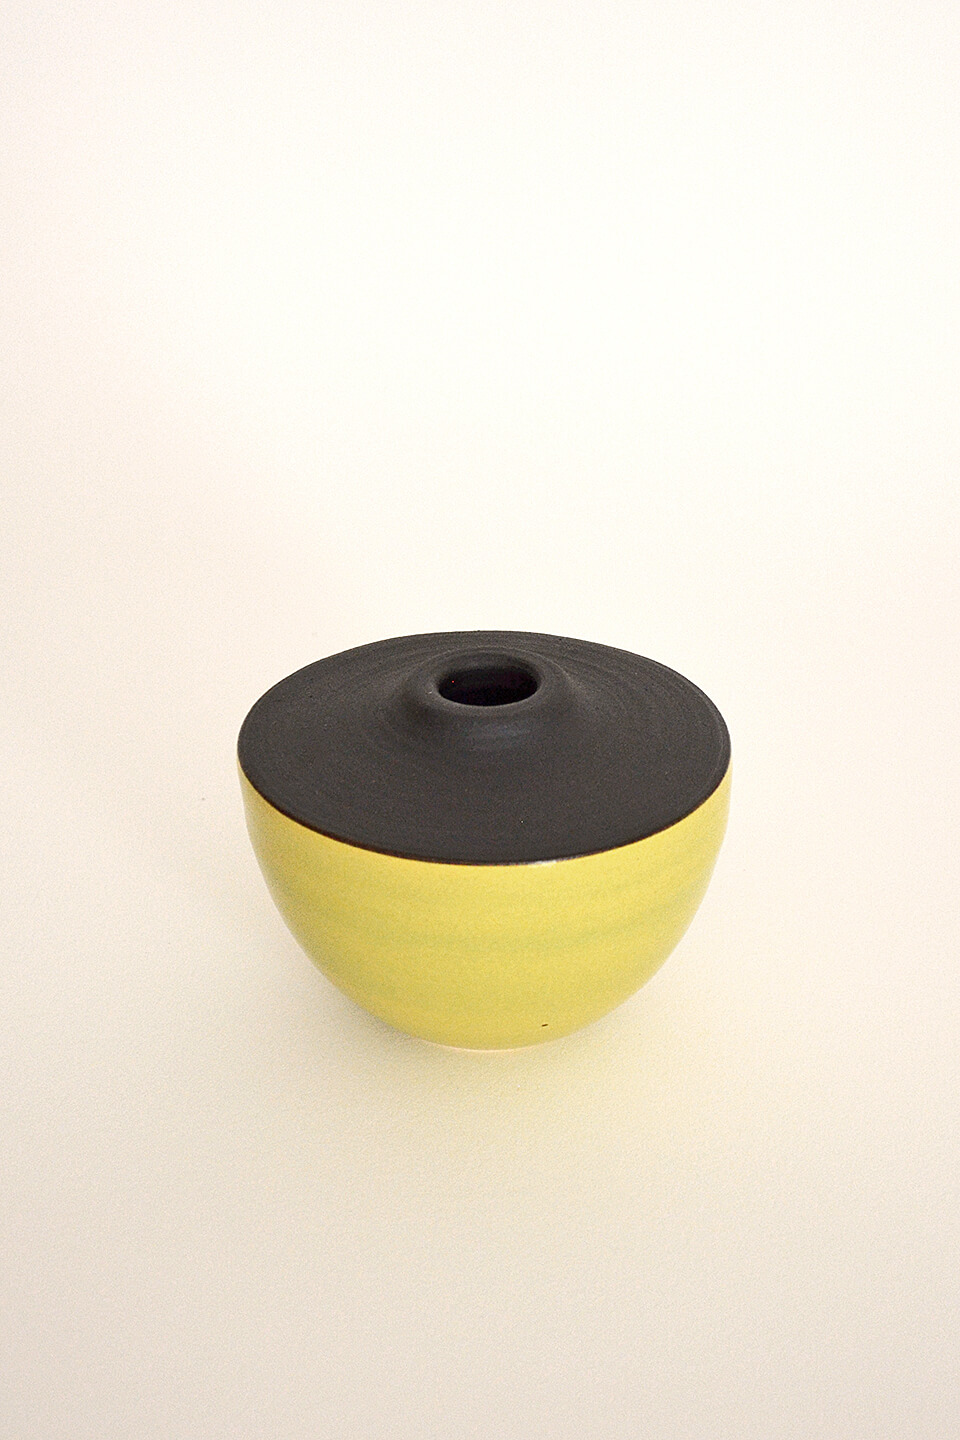 Black + Satin Yellow Green Ceramic Vase No. 645